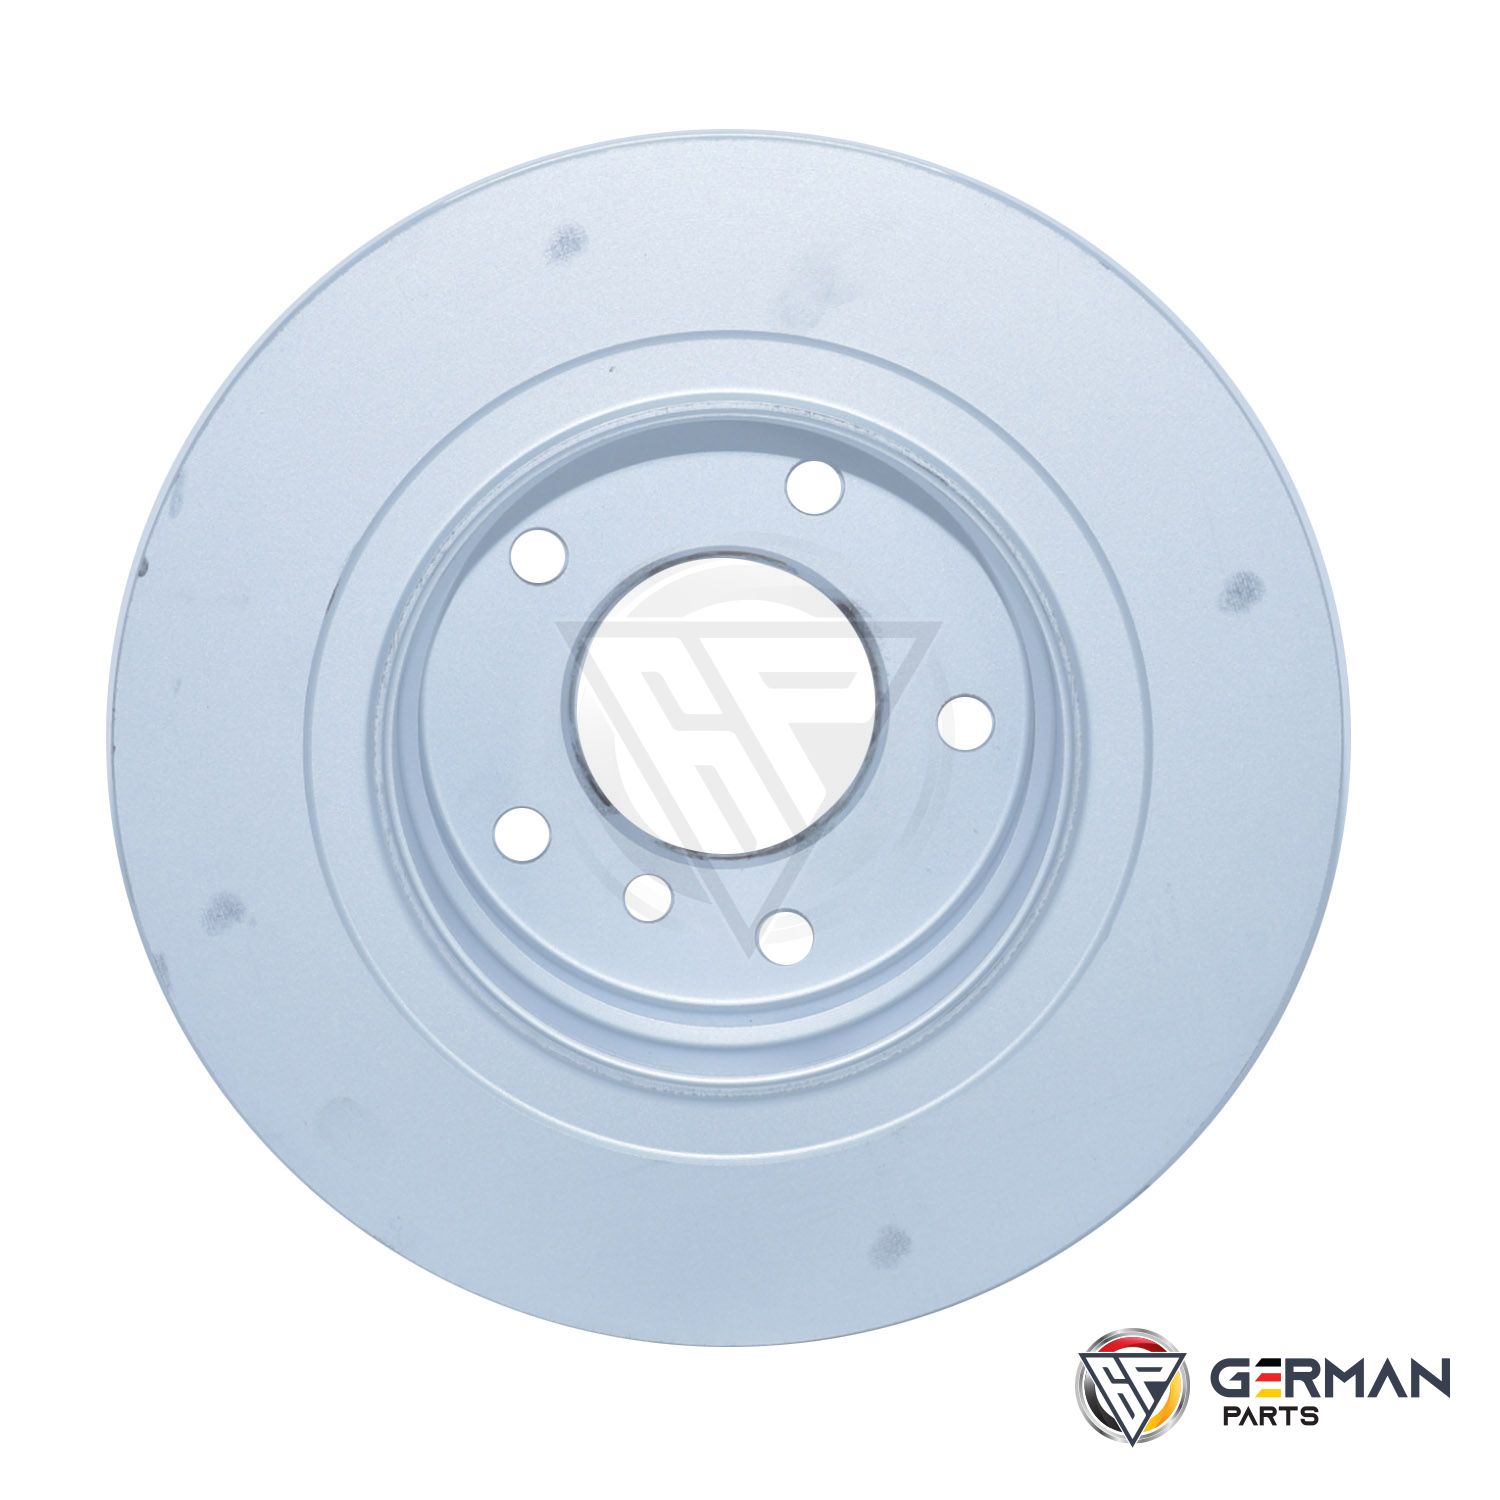 Buy BMW Rear Brake Disc 34216855002 - German Parts